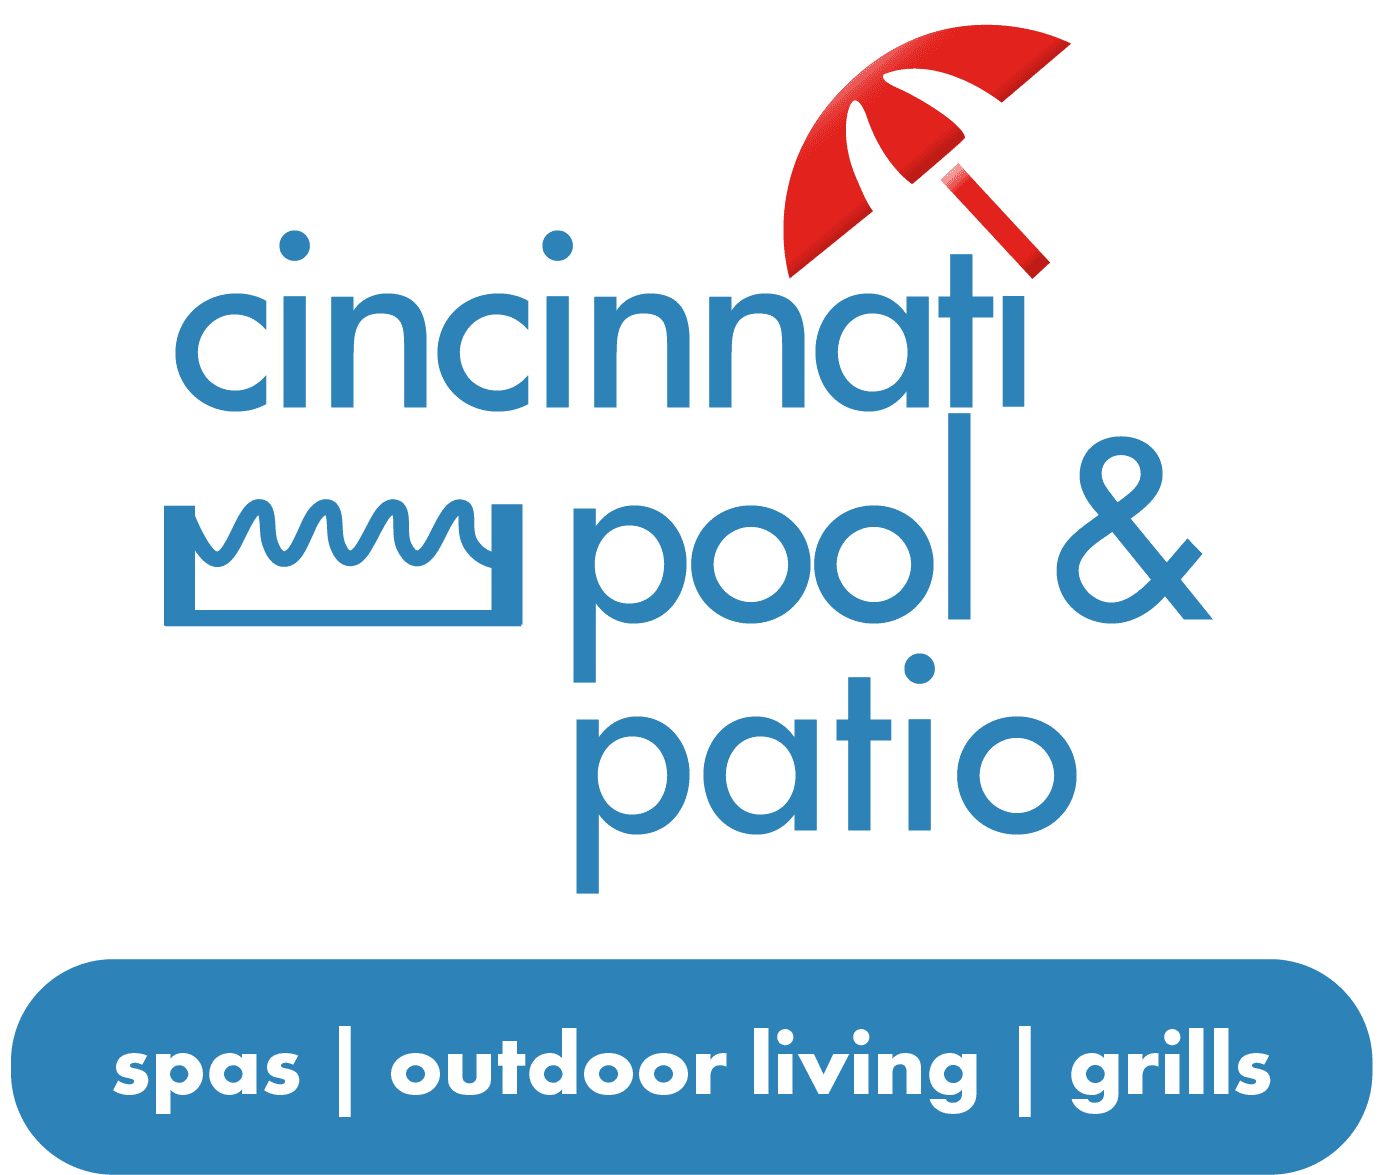 Cincinnati Pool and Patio